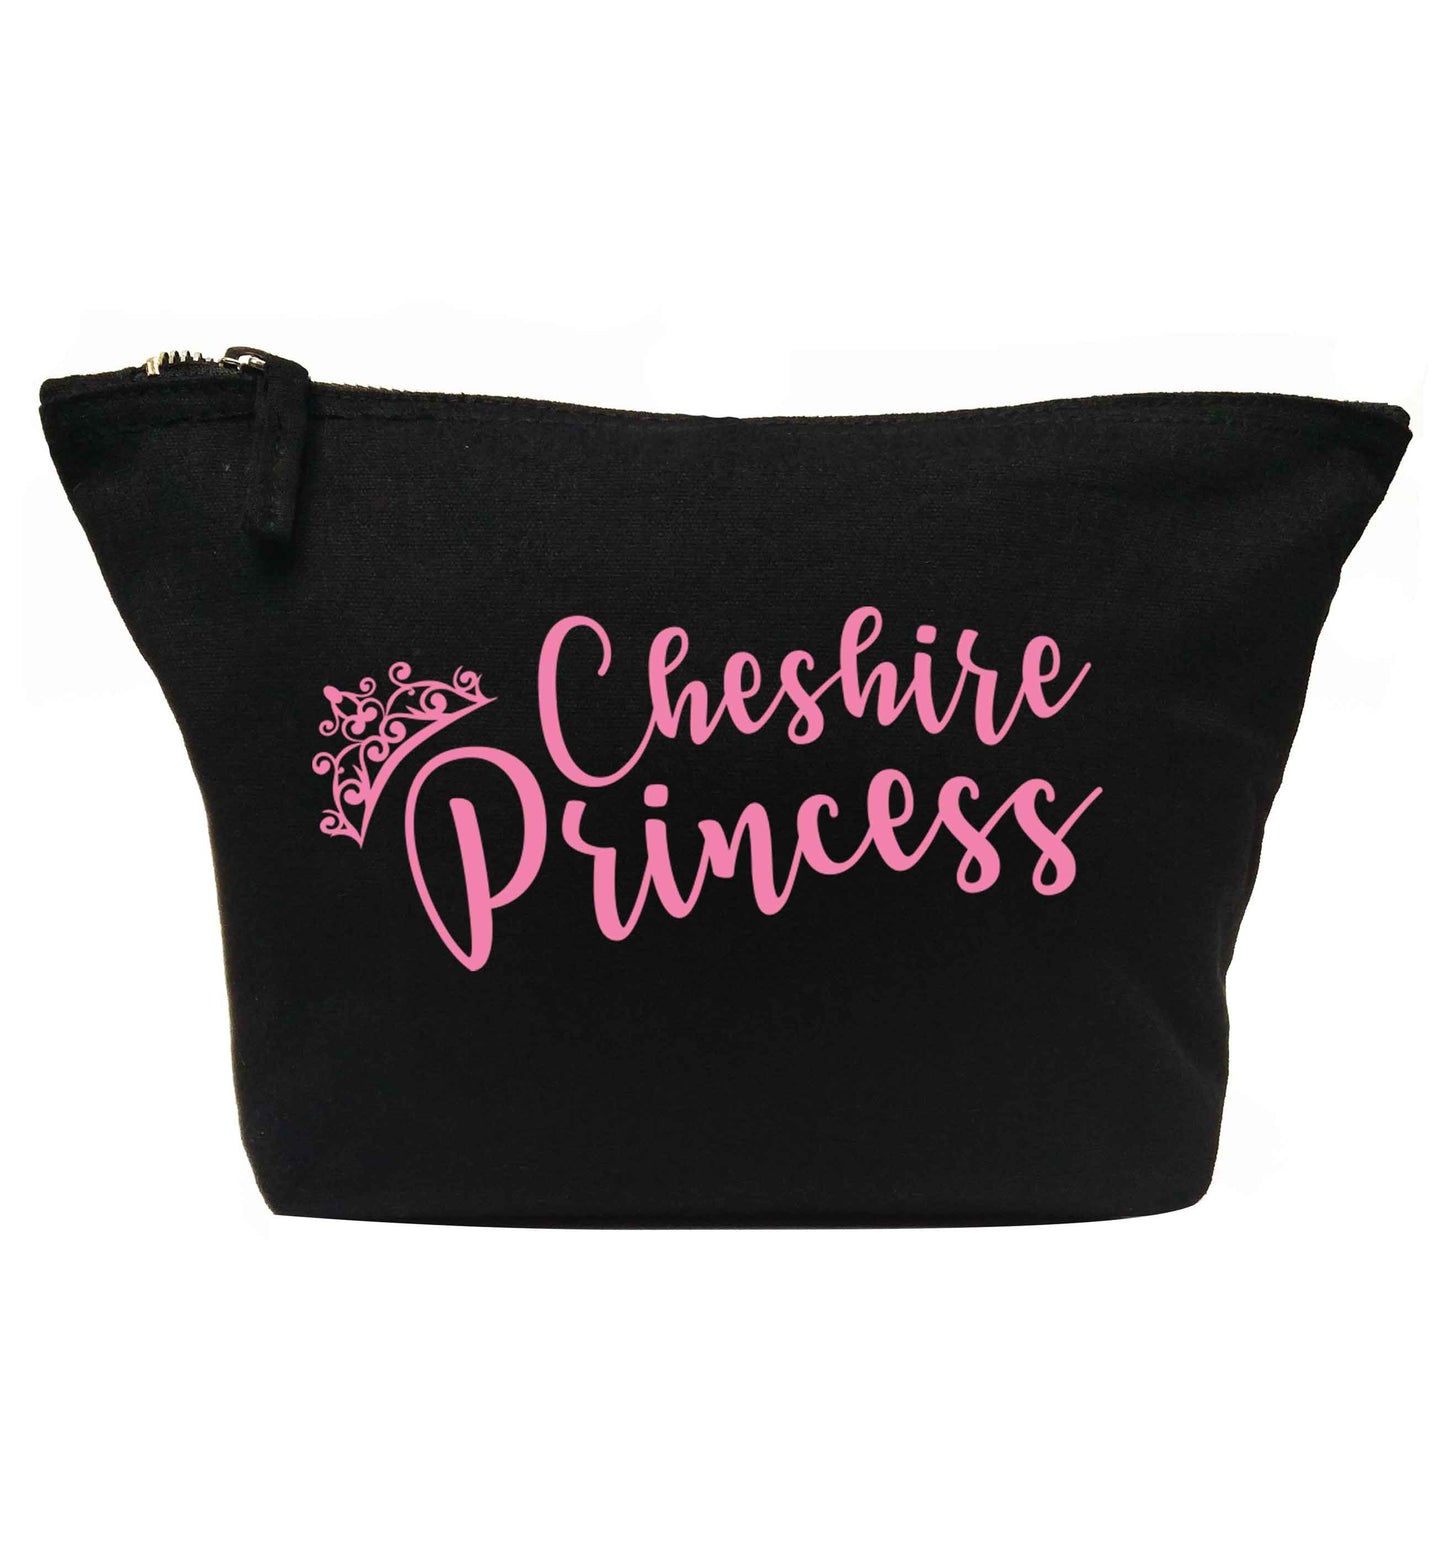 Cheshire princess | makeup / wash bag